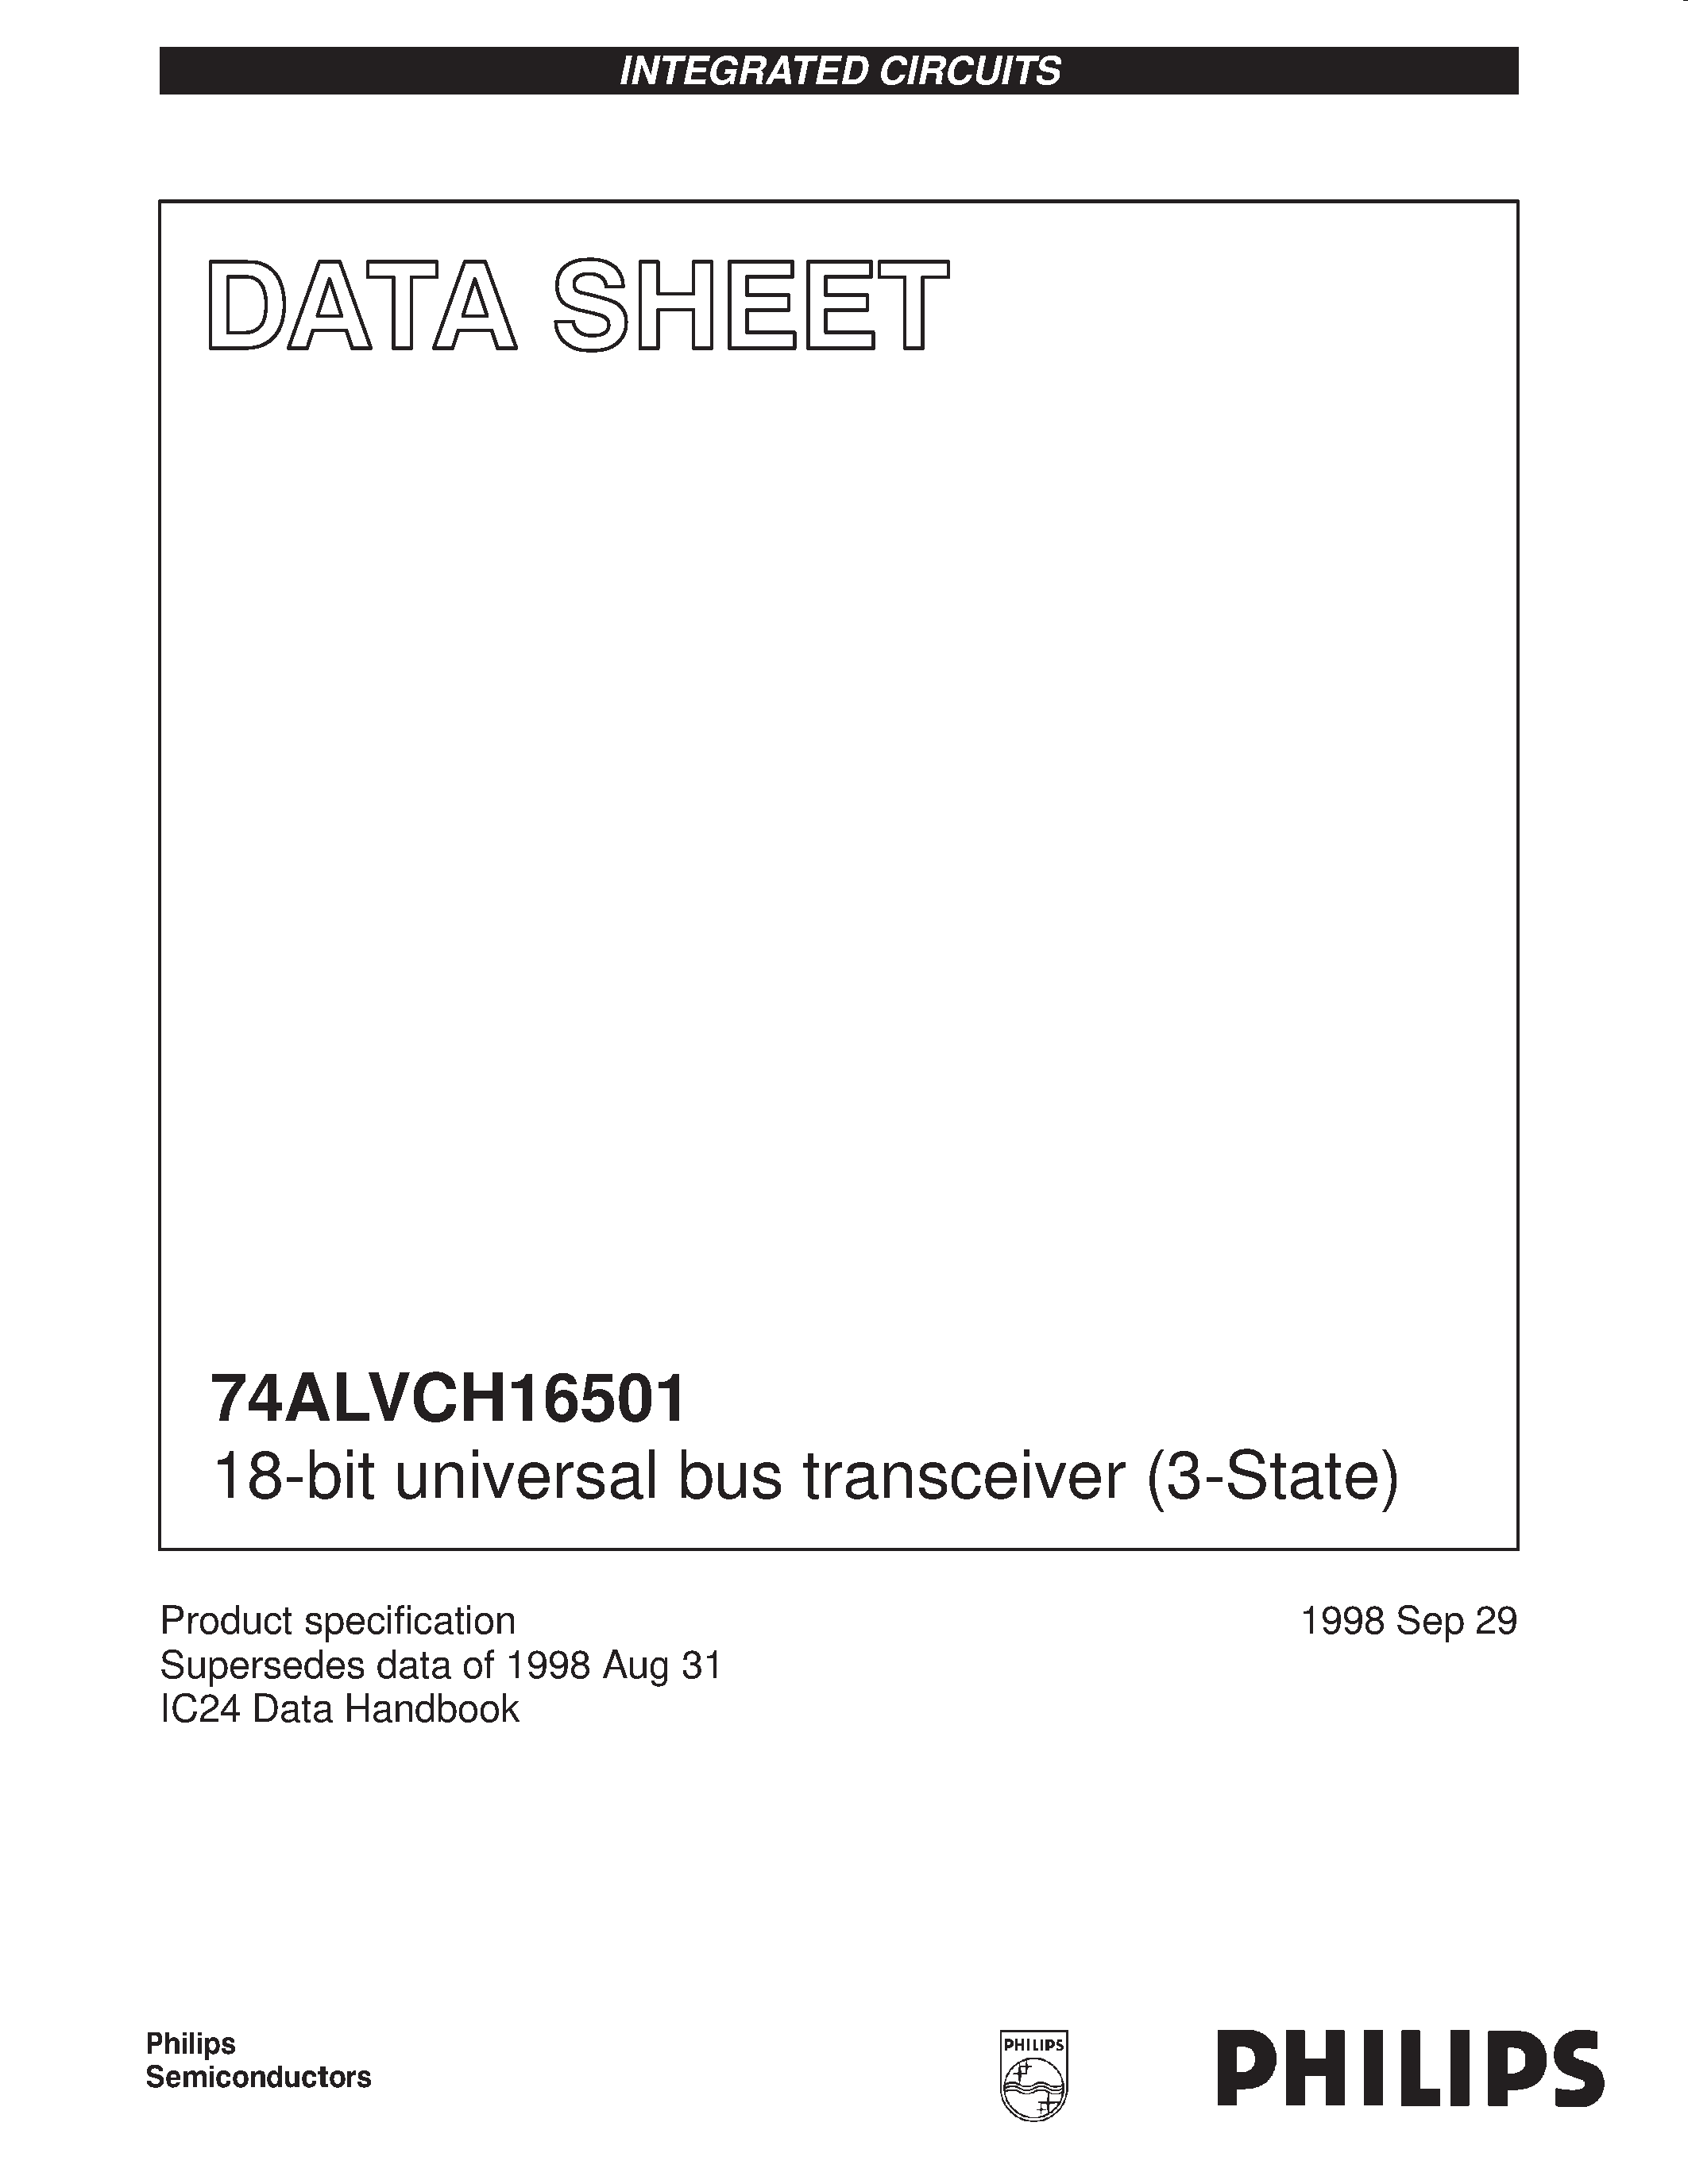 Даташит 74ALVCH16501 - 18-bit universal bus transceiver 3-State страница 1